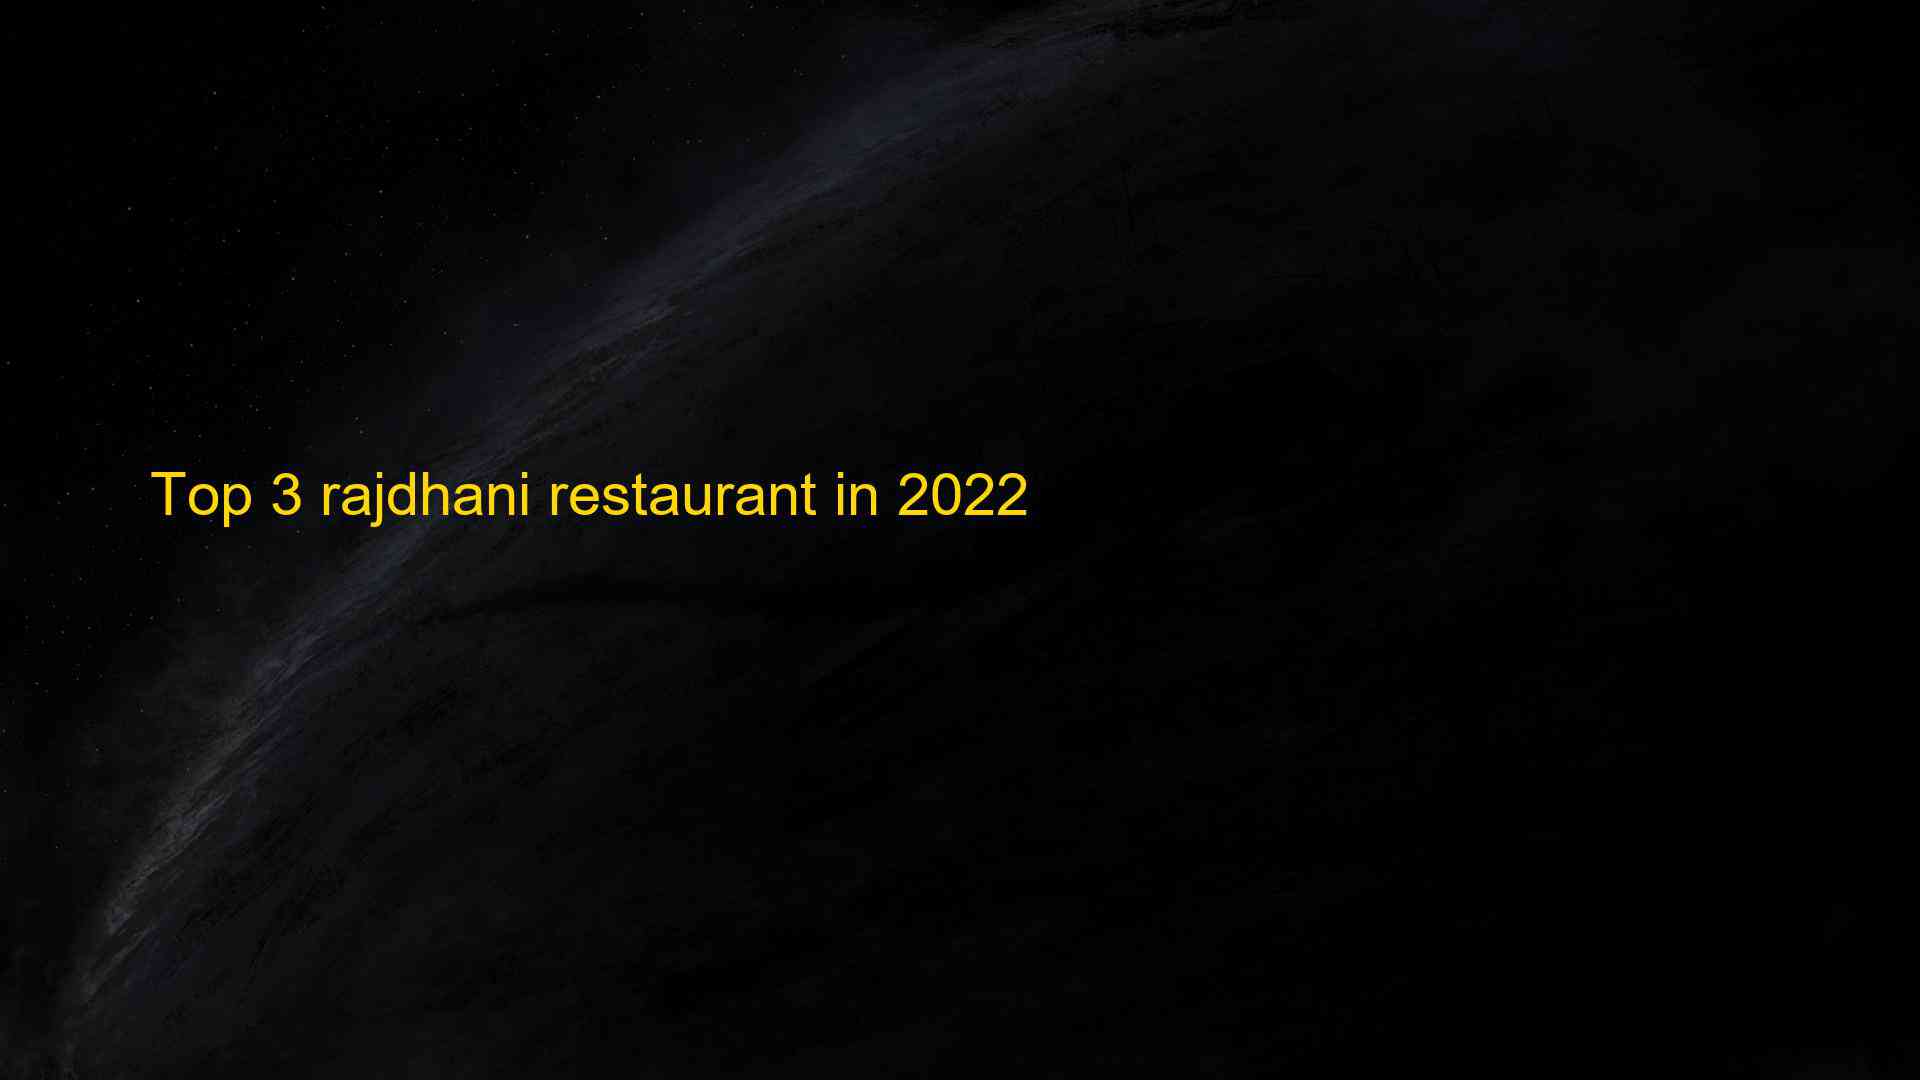 Top 3 rajdhani restaurant in 2022 1662822232